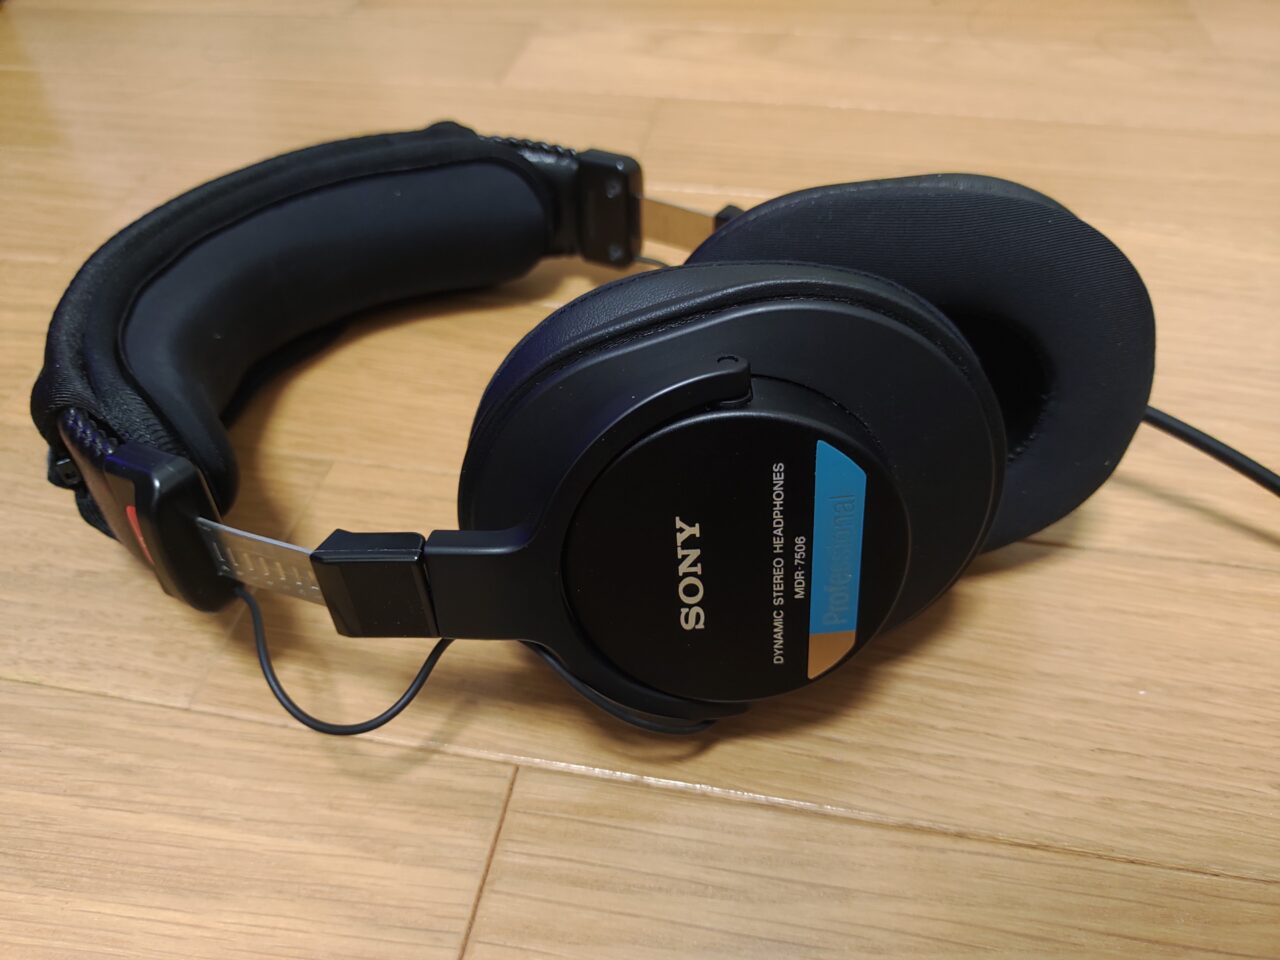 MDR-7506 Sony ヘッドホン SONY モニターヘッドホン ソニー